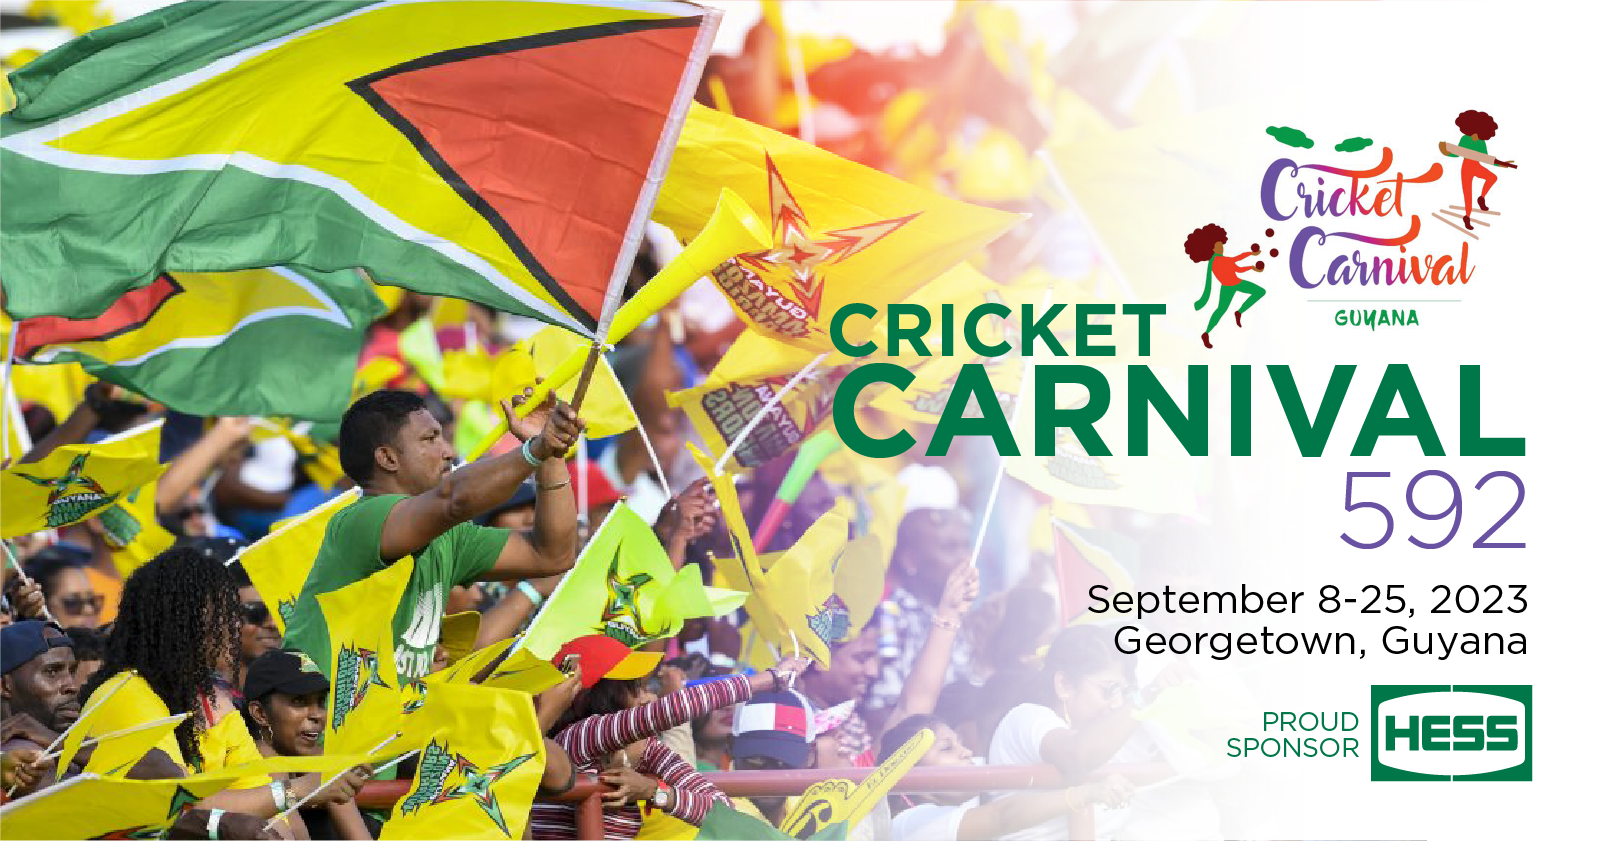 Hess Sponsors Guyana’s 2023 Cricket Carnival